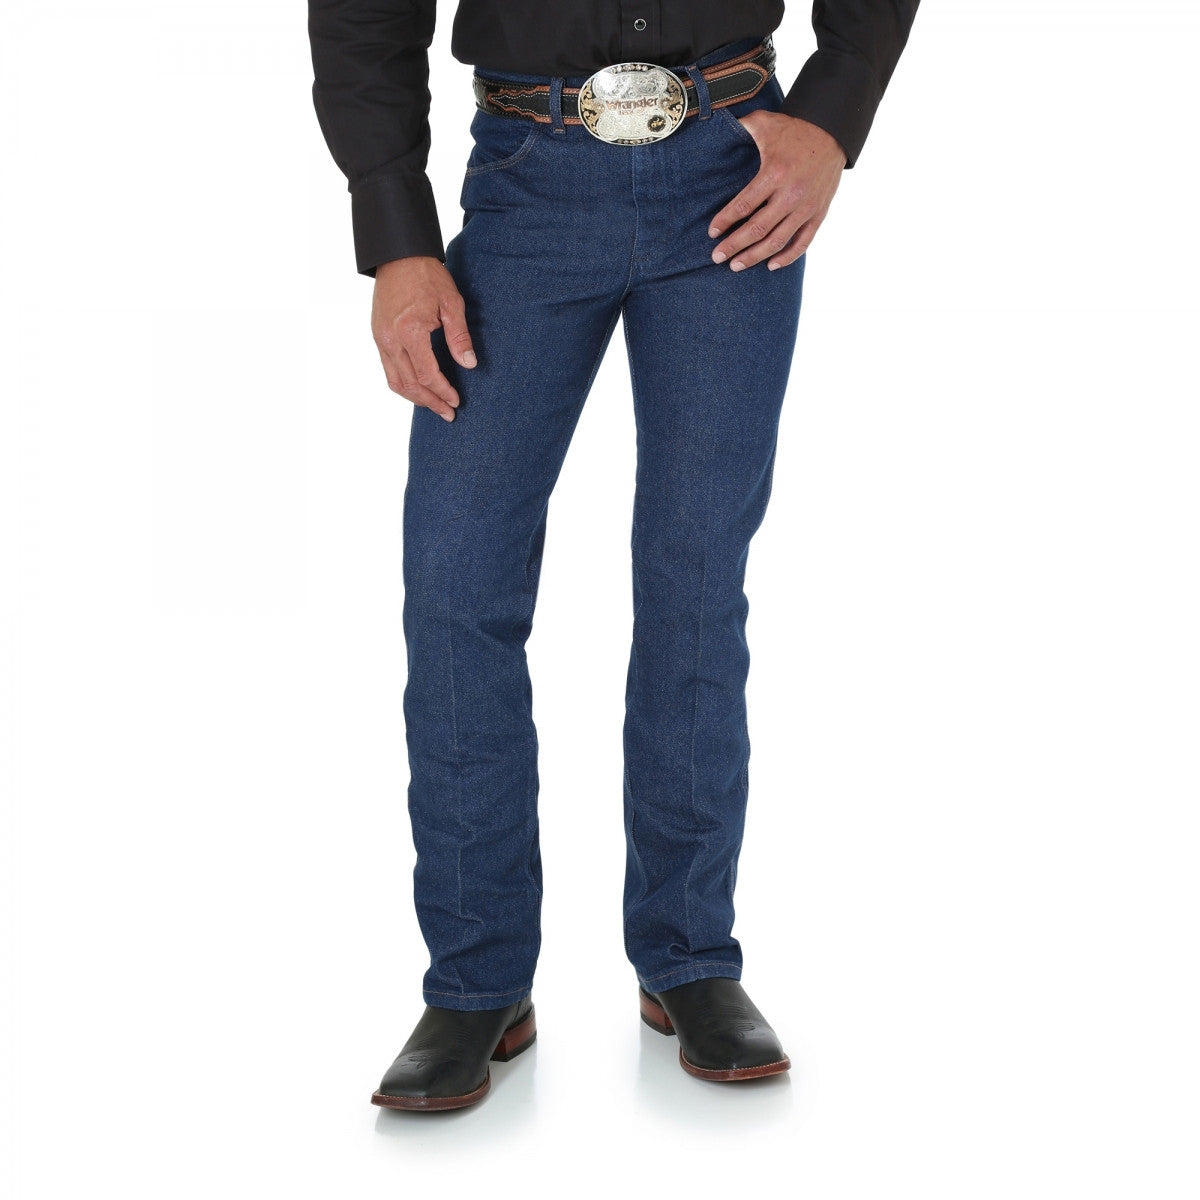 Men's Wrangler Boot Cut Slim Fit Jean #935NAV | High Country Western Wear